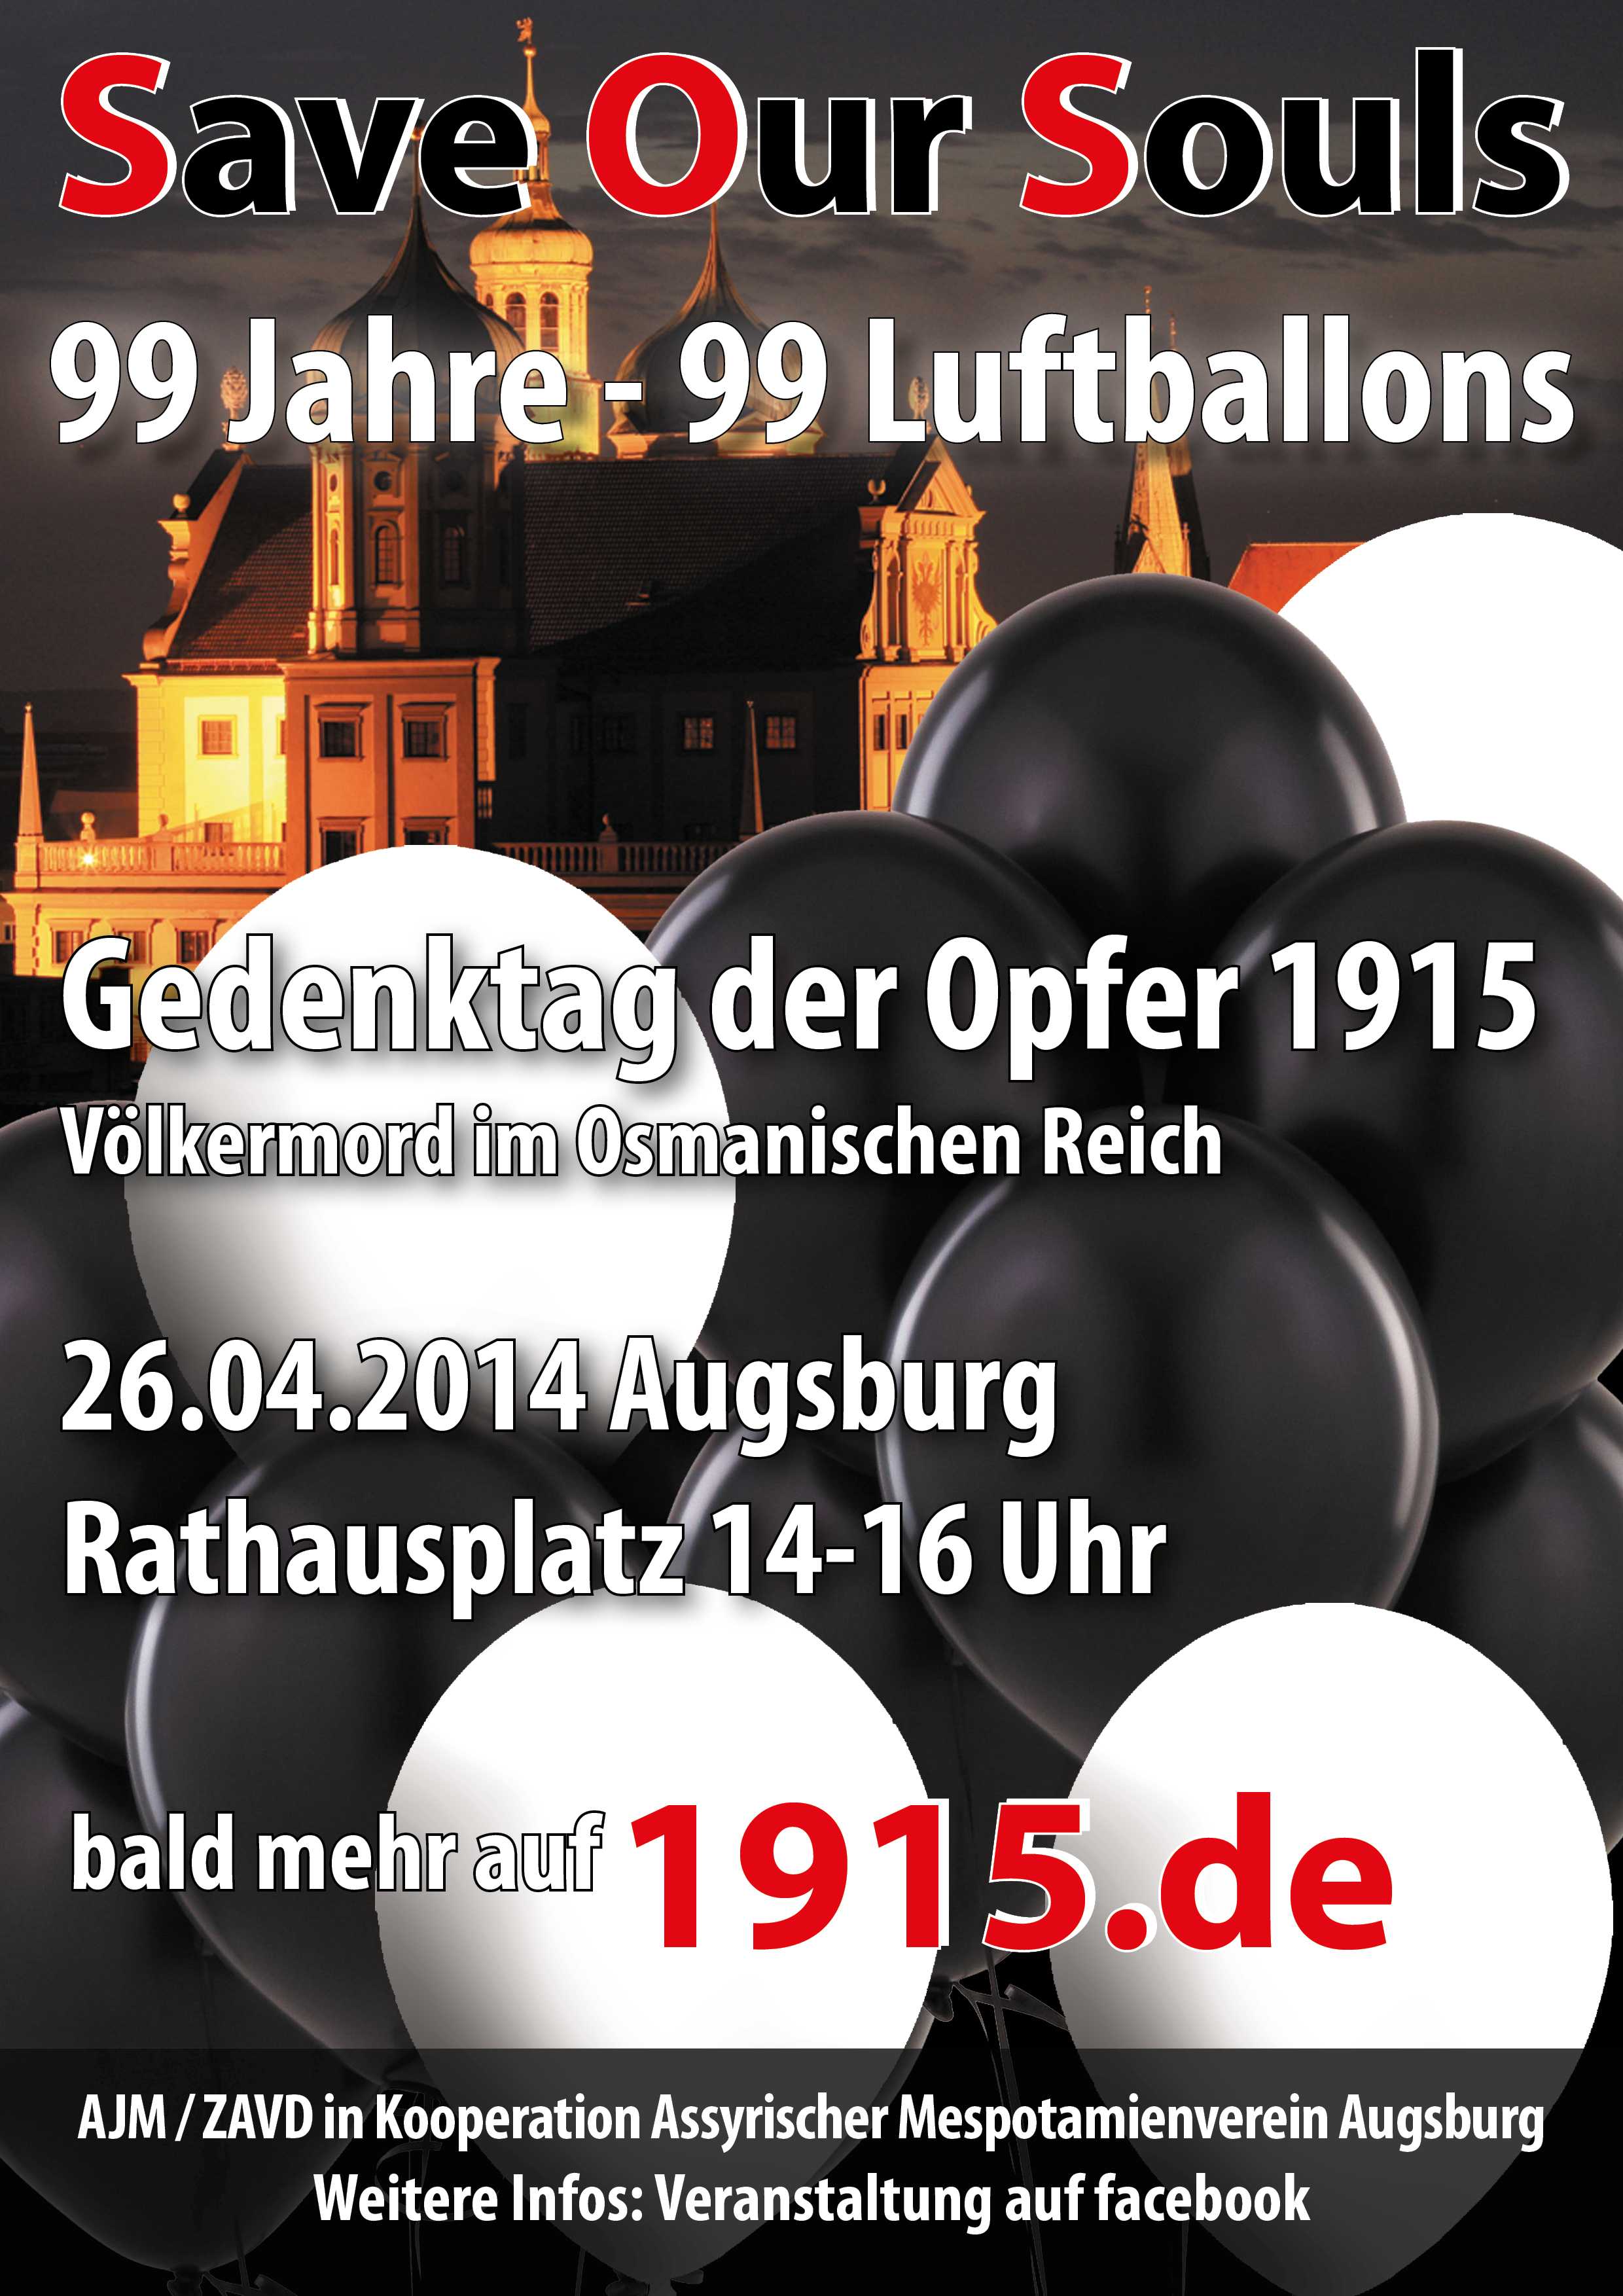 Save Our Souls 99. Jahrestag - 99. Luftballons